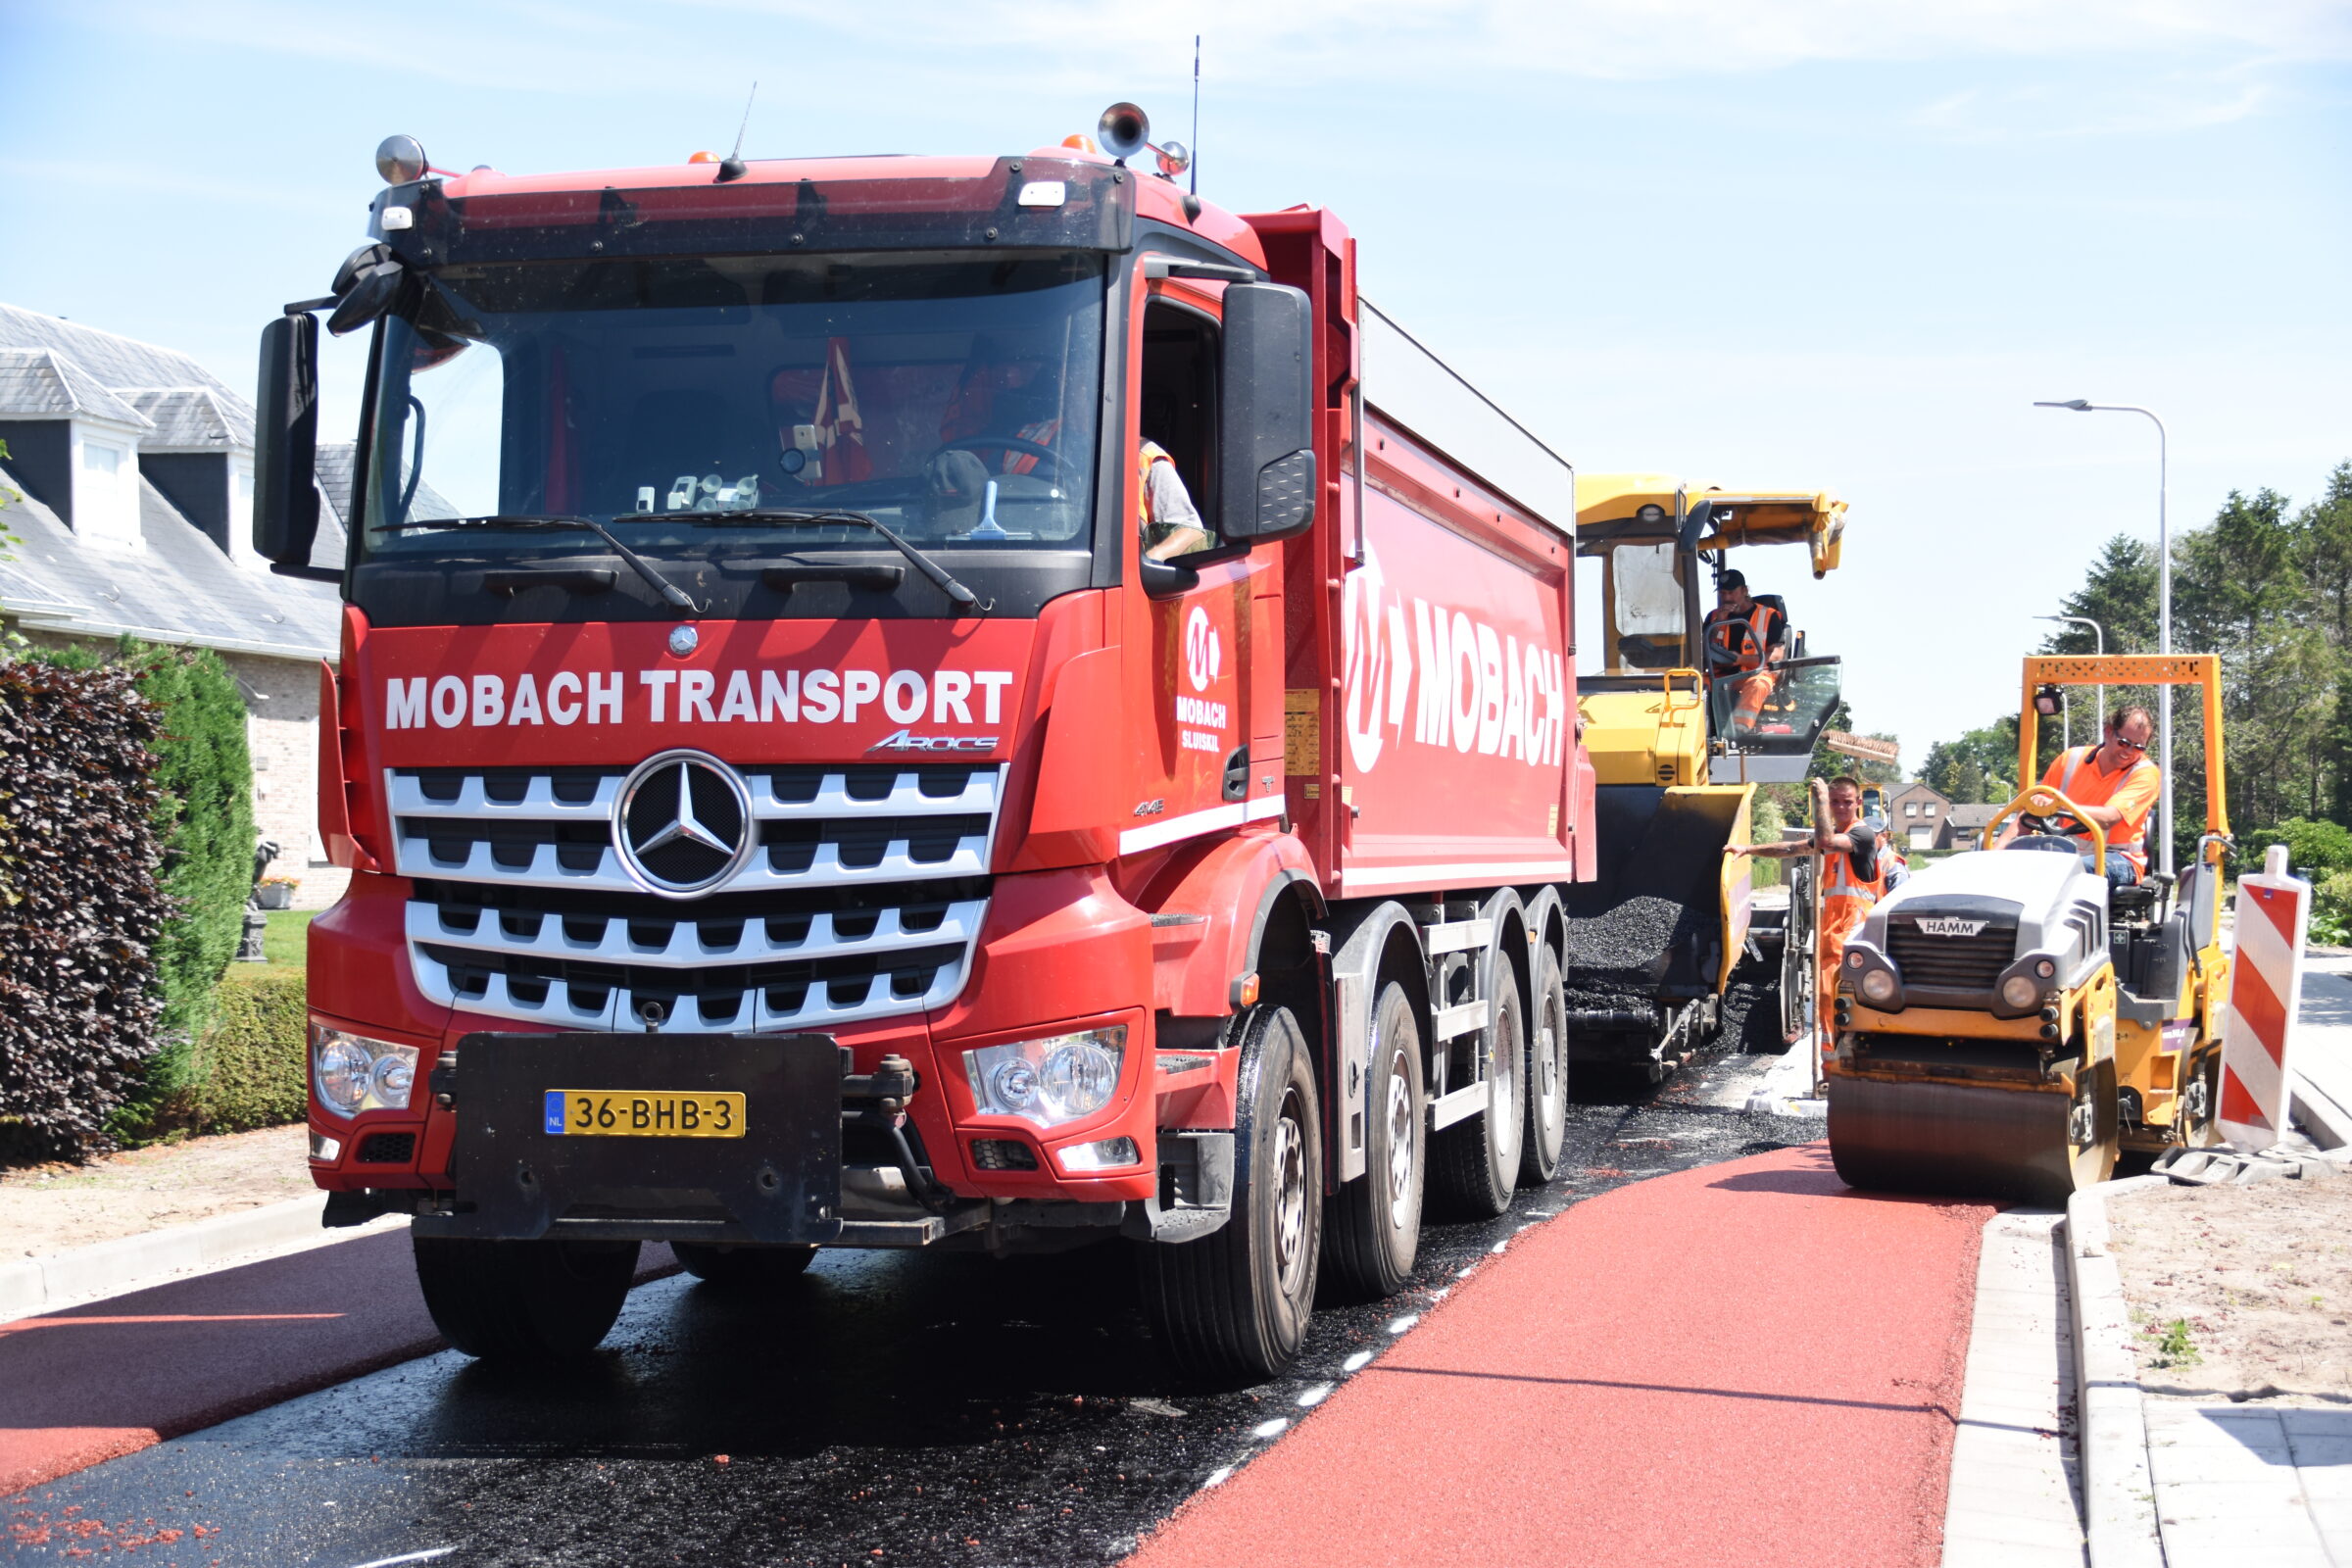 H4A Openbare Ruimte asfalteert weg in Heikant met machines en vrachtwagen Mobach